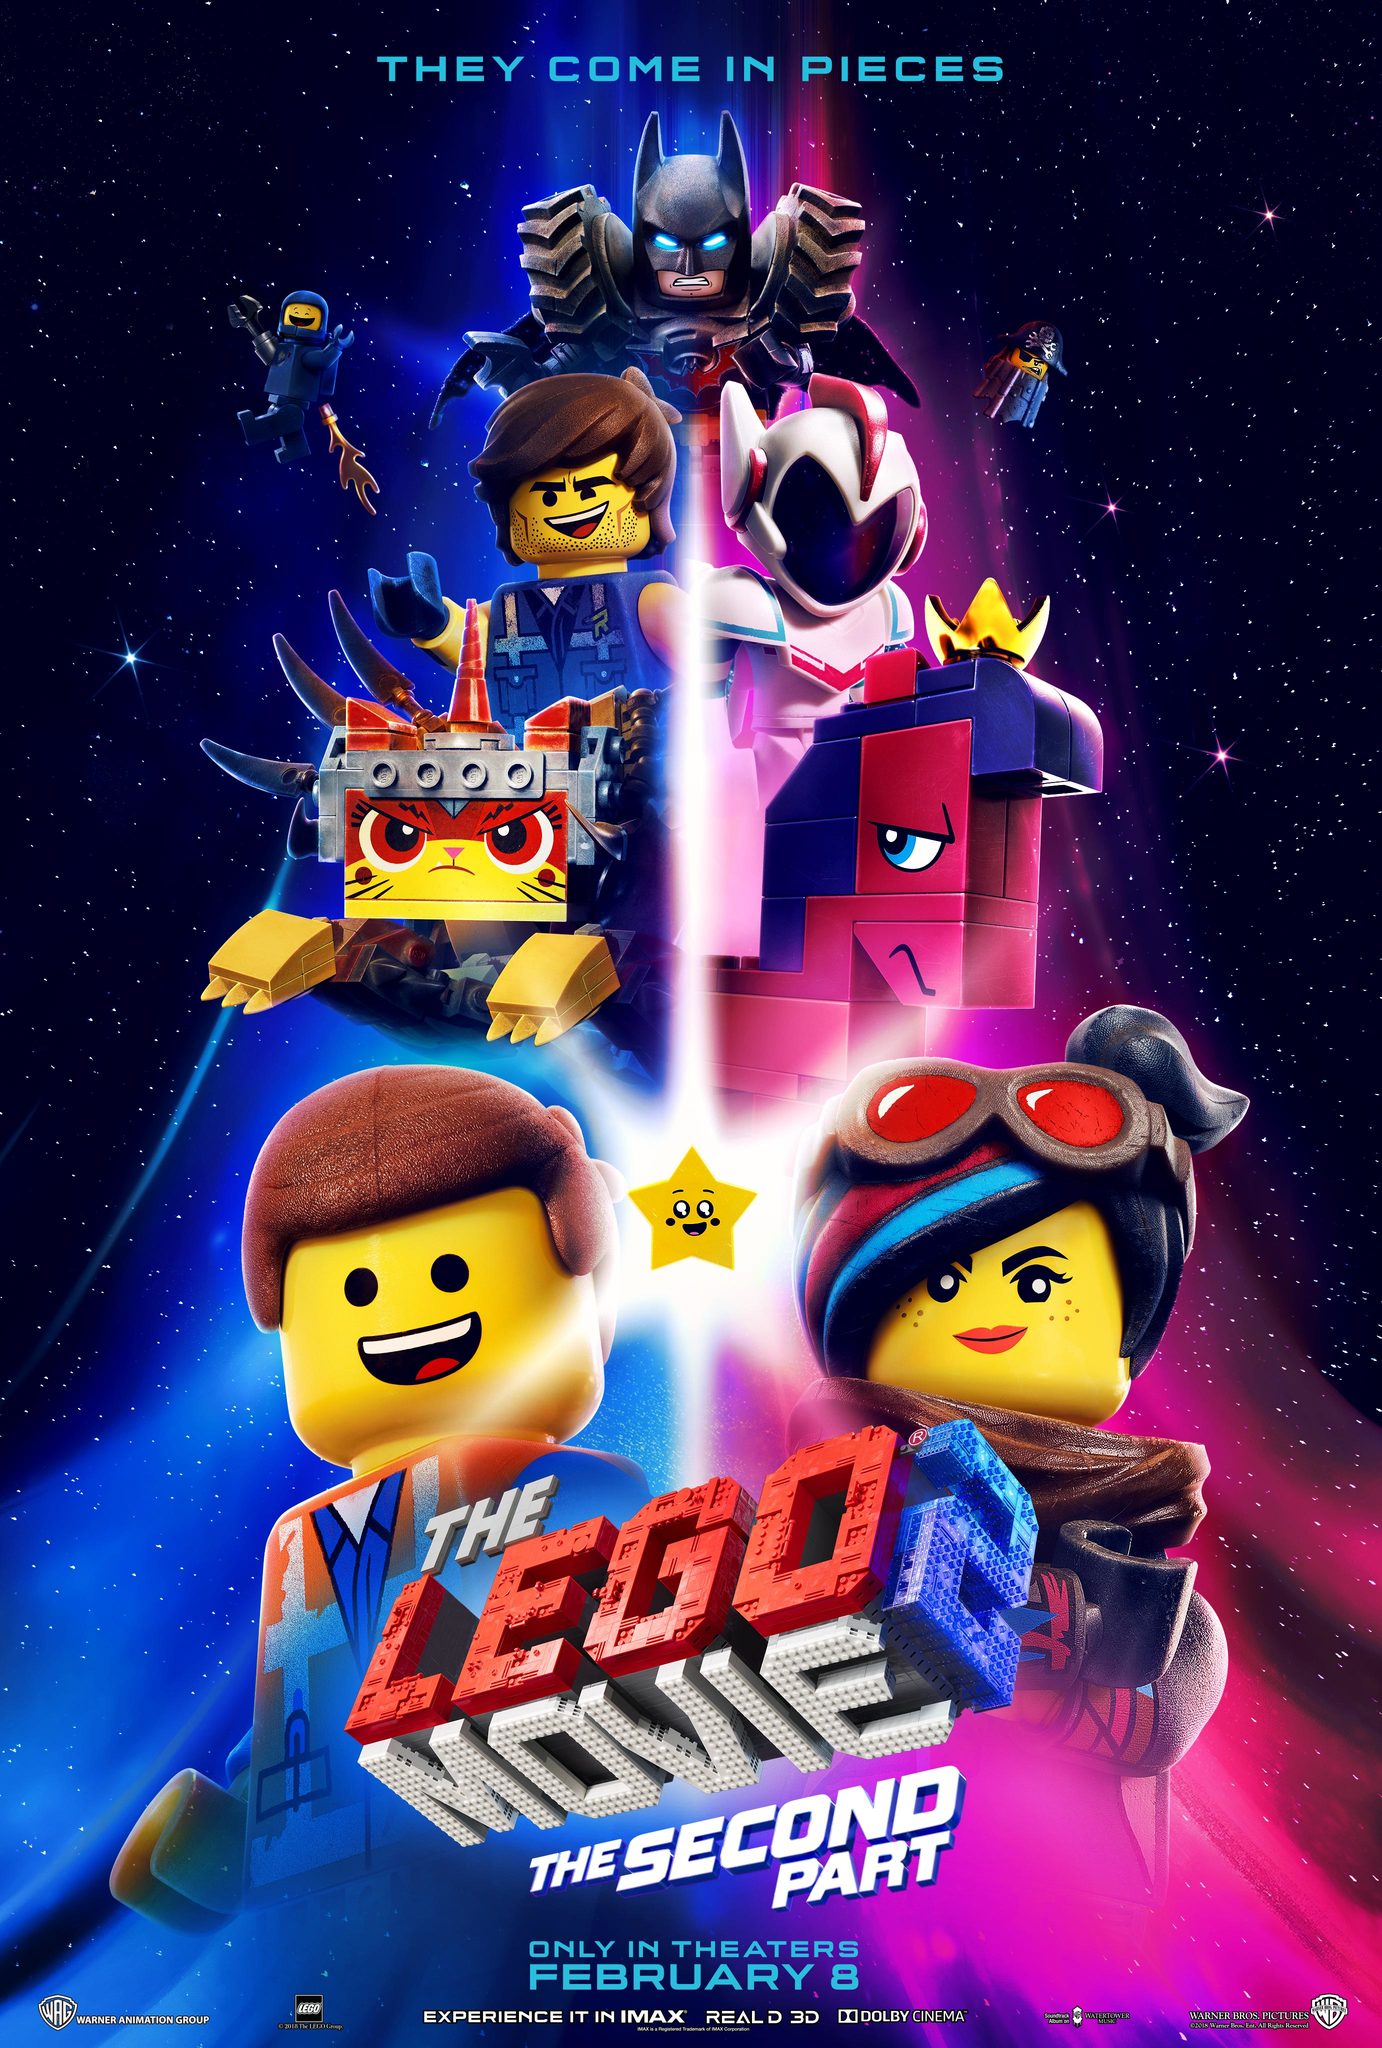 Stiahni si Filmy Kreslené LEGO pribeh 2 / The Lego Movie 2: The Second Part (2019)(CZ/SK/EN)[1080p] = CSFD 69%